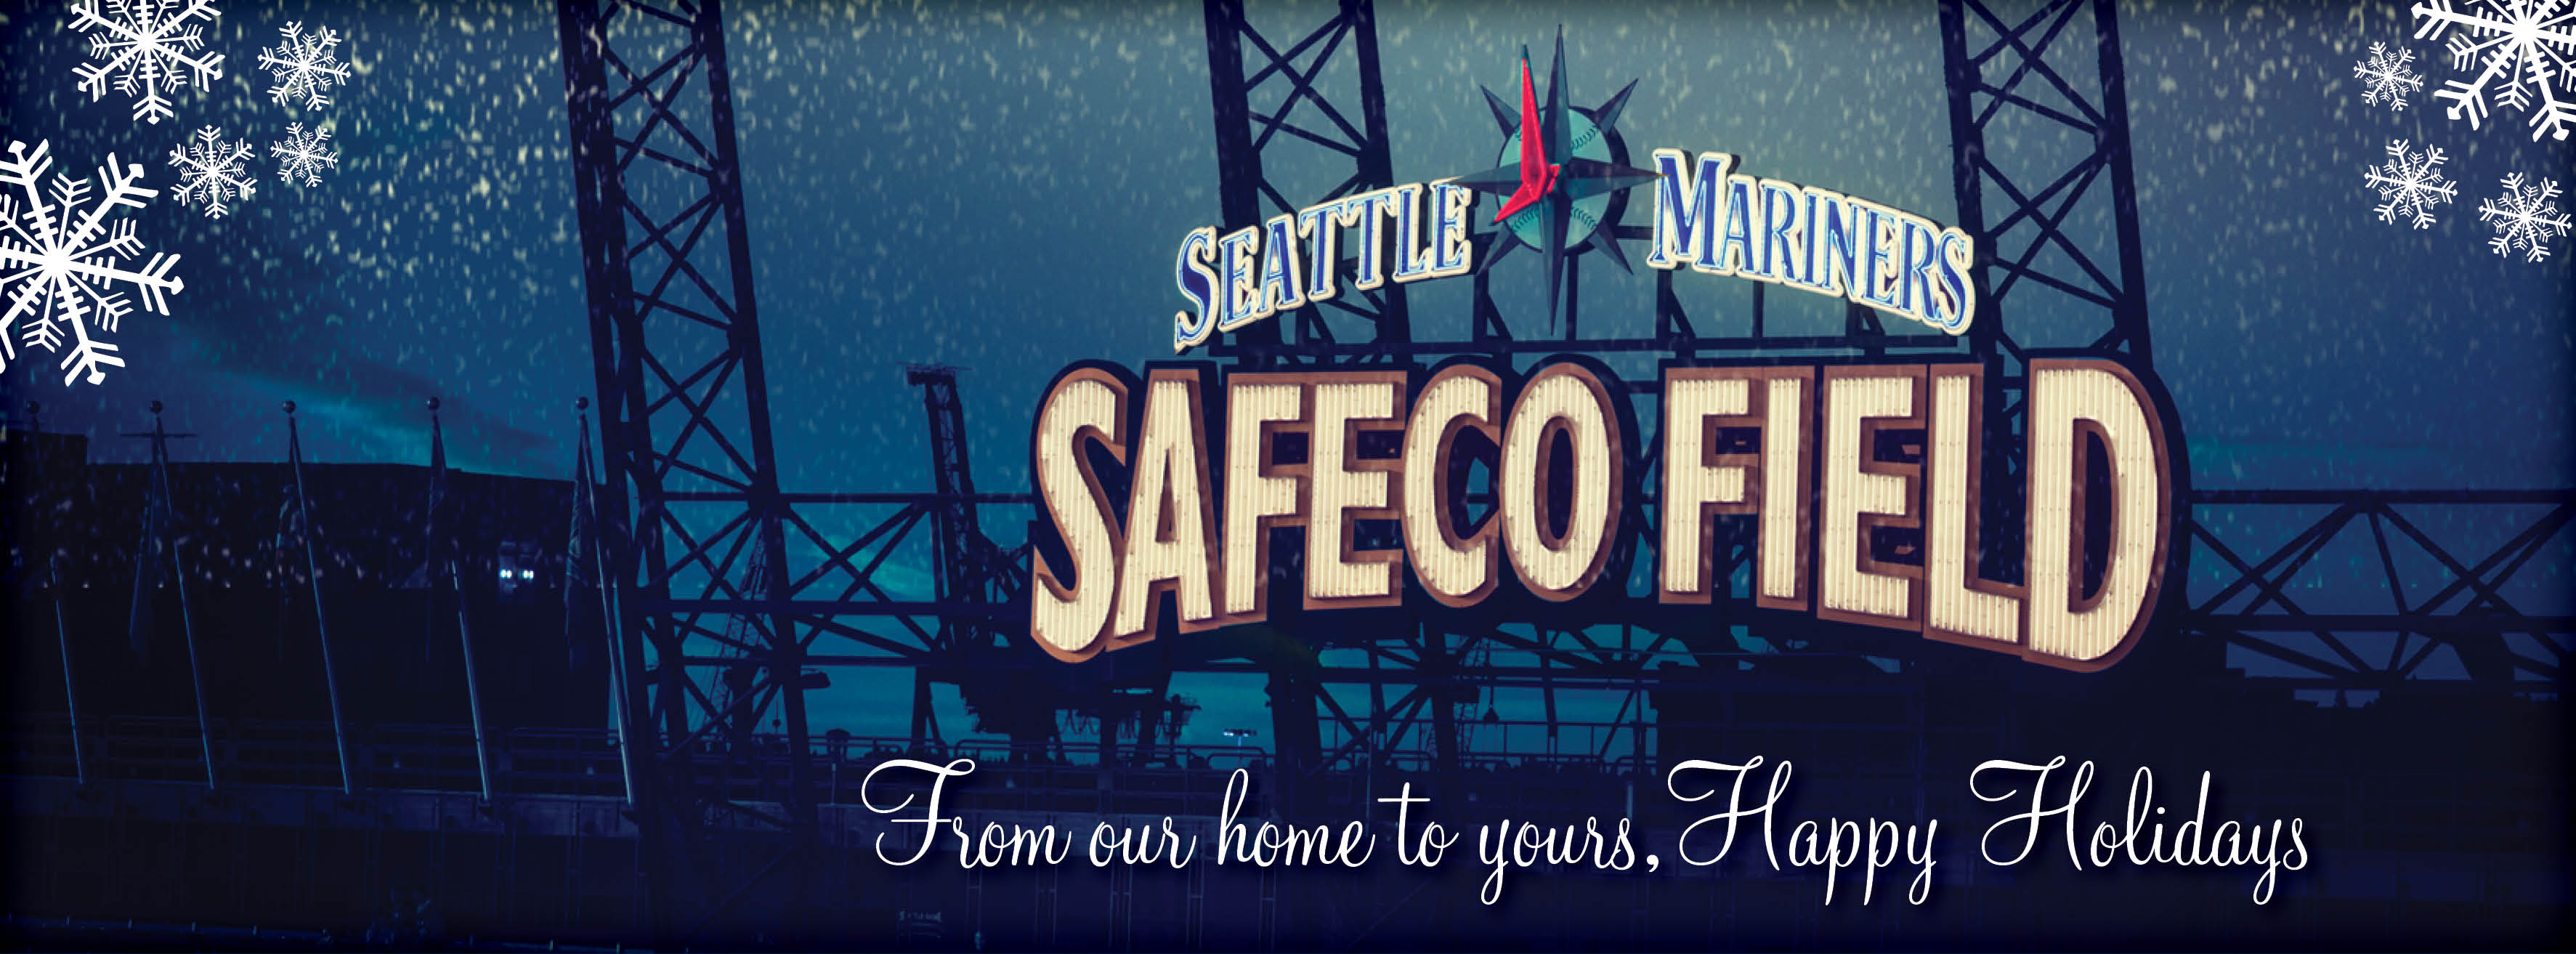 Seattle mariners safeco stadium baseball mlb wallpaper | 3546x1313 ...